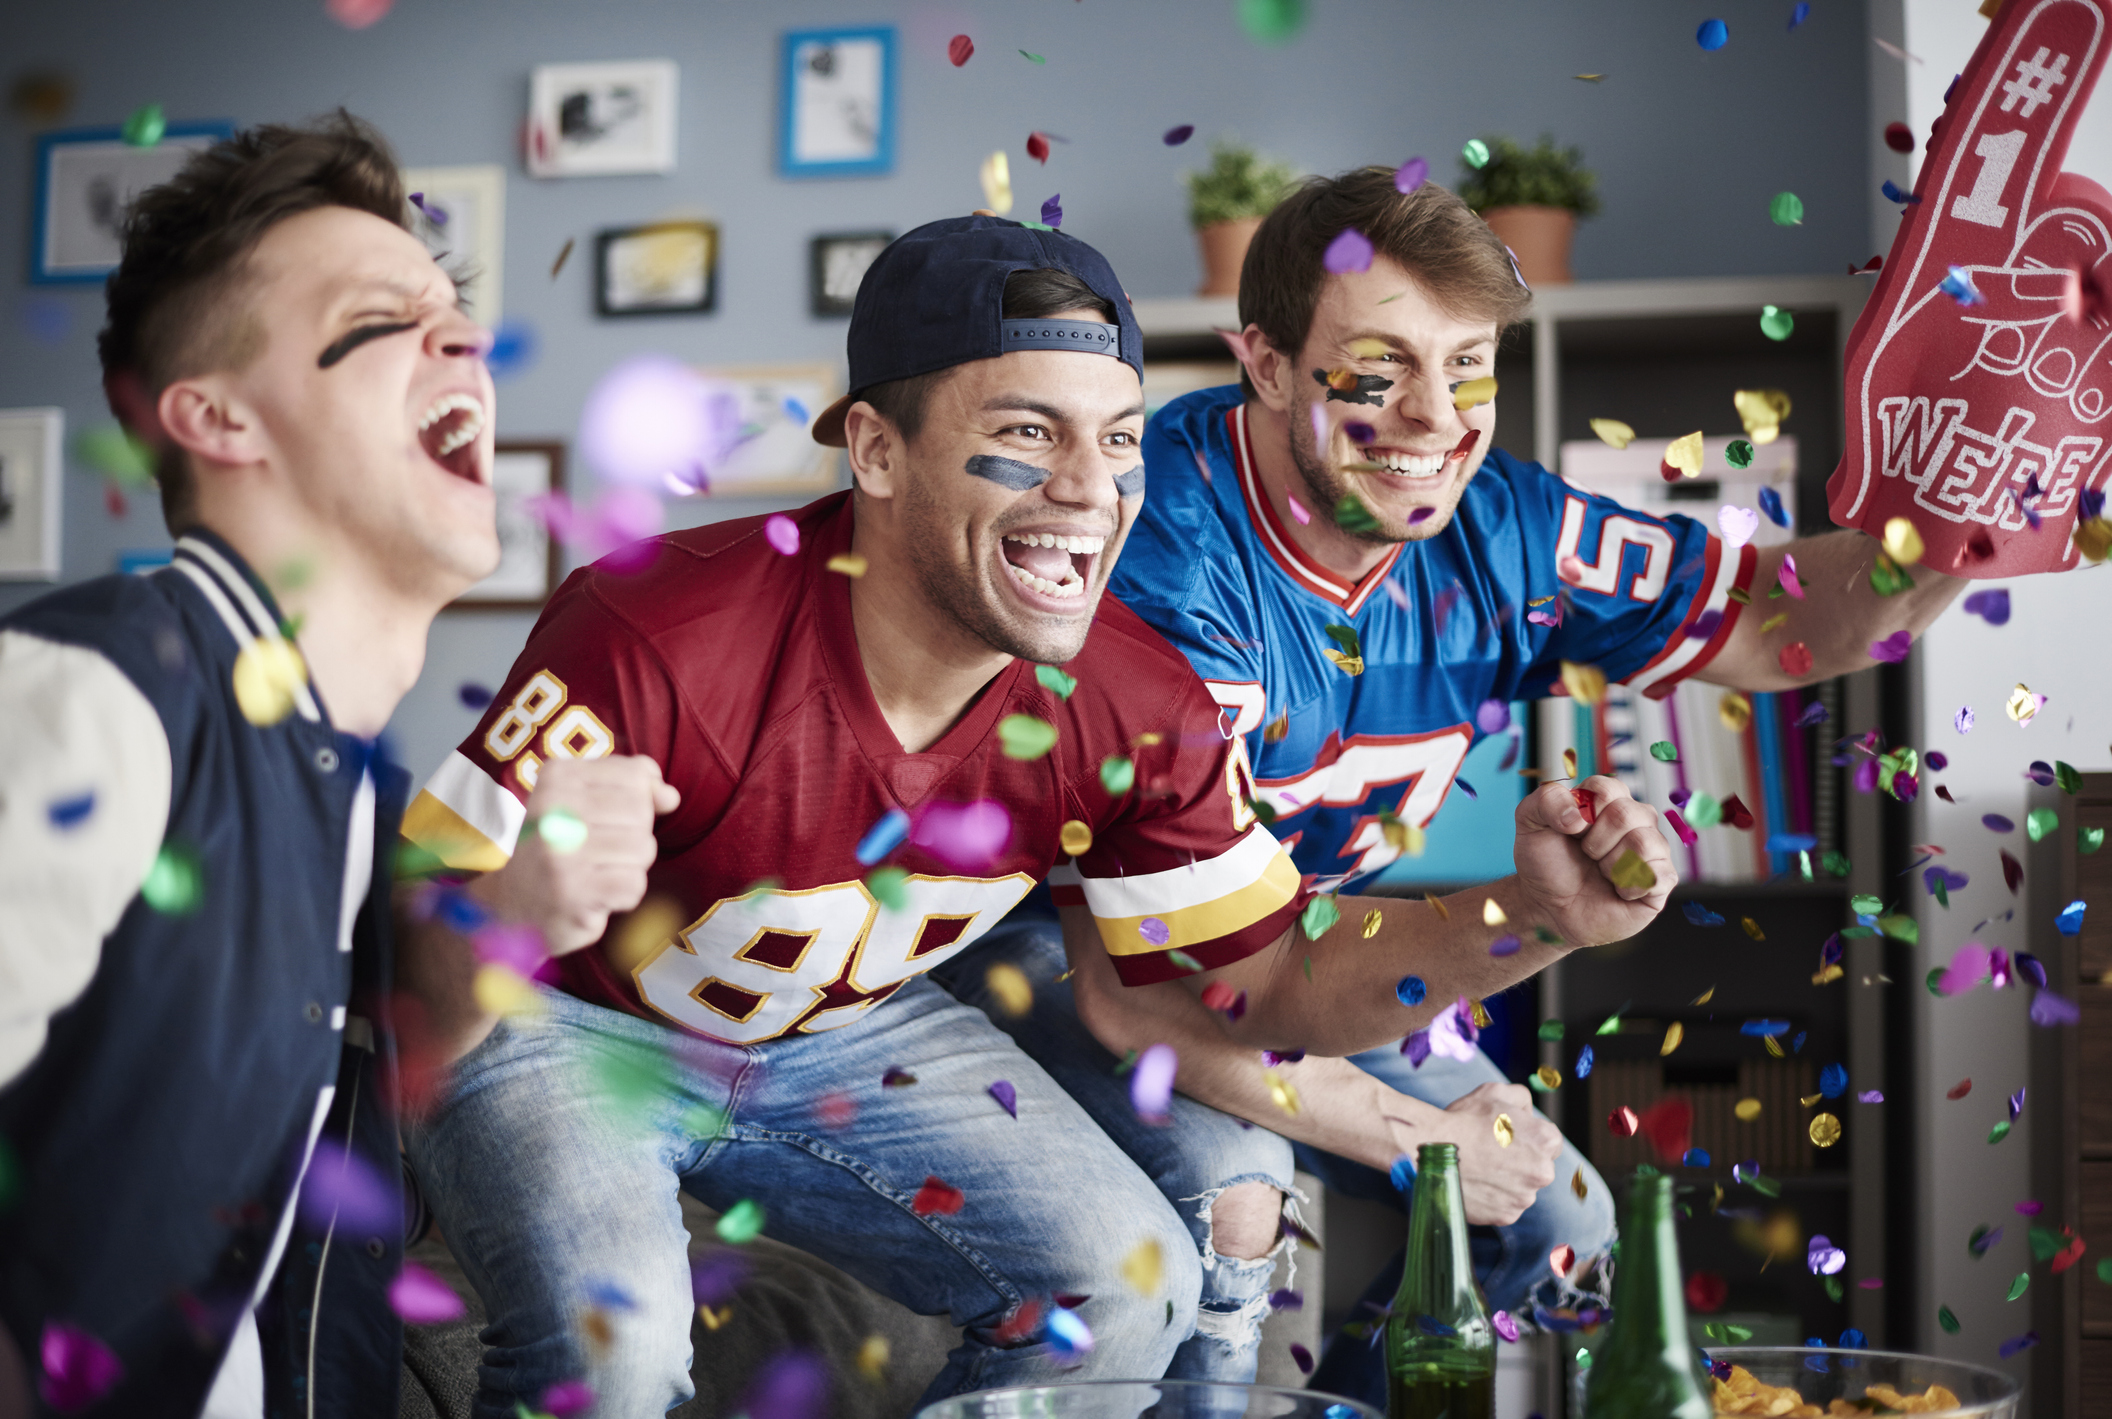 Three American football fans celebrate a win among falling confetti.